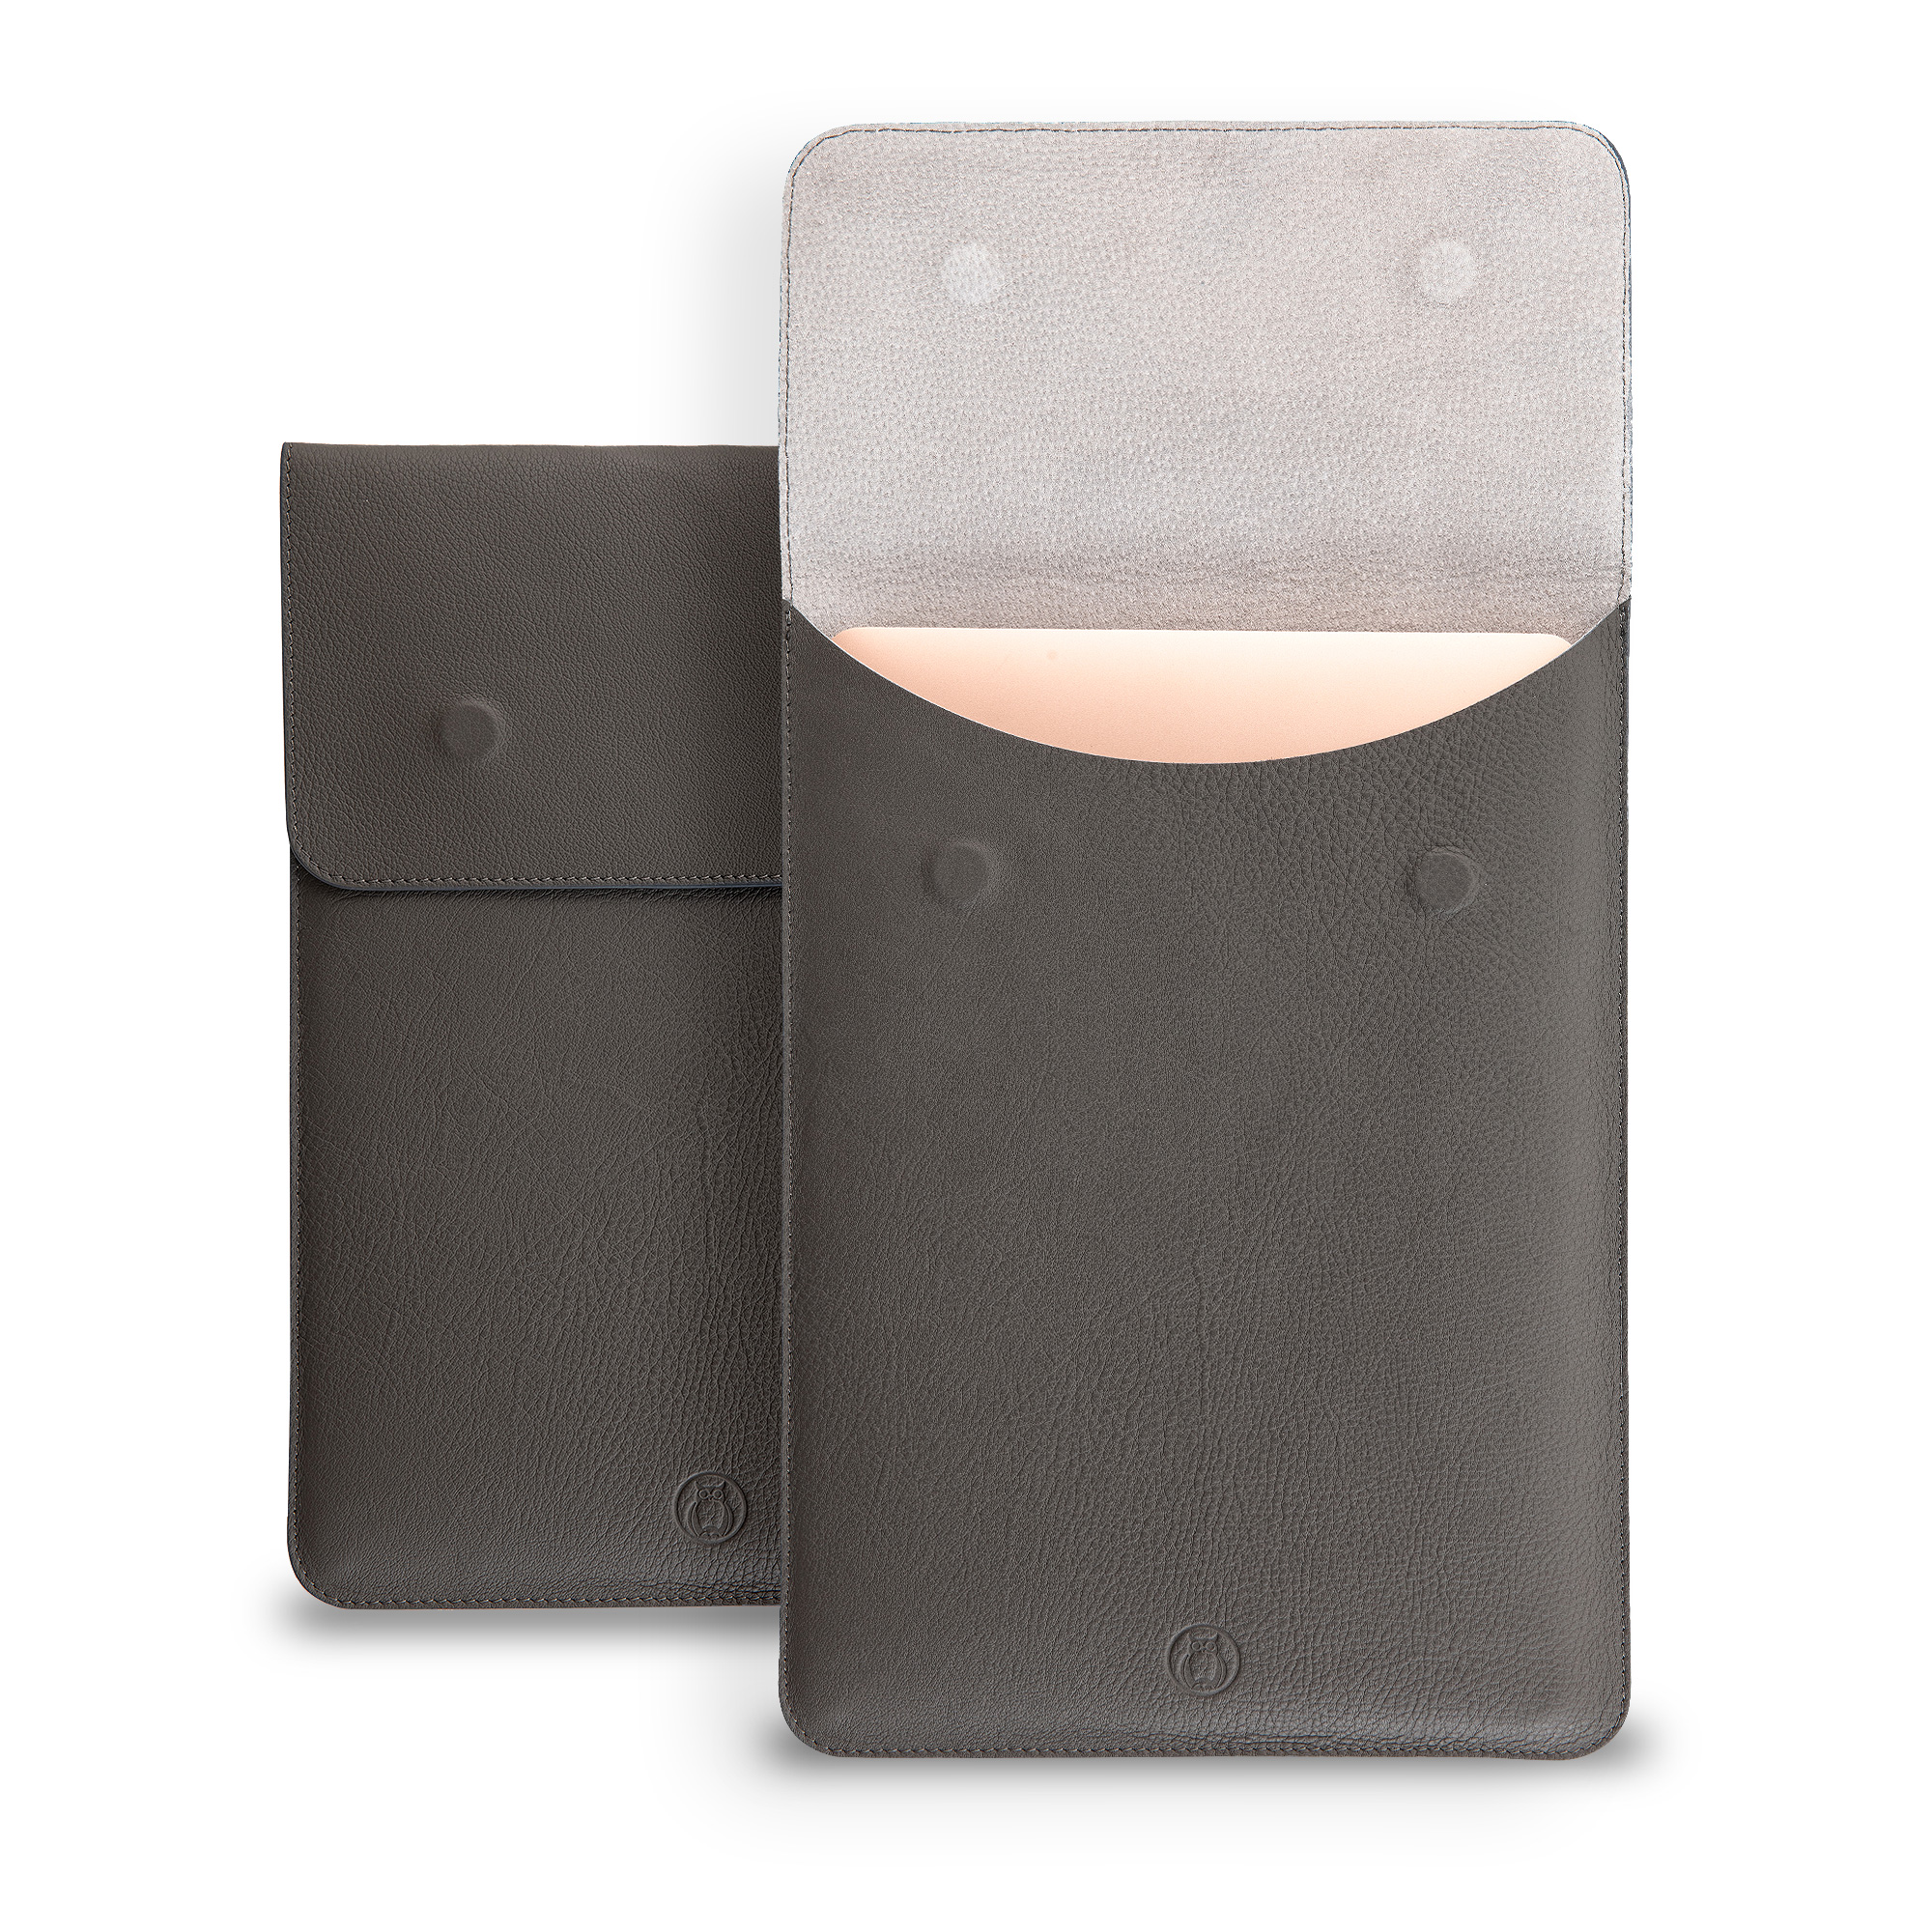 Husa laptop MacBook 13 inch piele naturala cu mouse pad inchidere magnetica margini vopsite manual e-store gri sanito.ro imagine 2022 depozituldepapetarie.ro